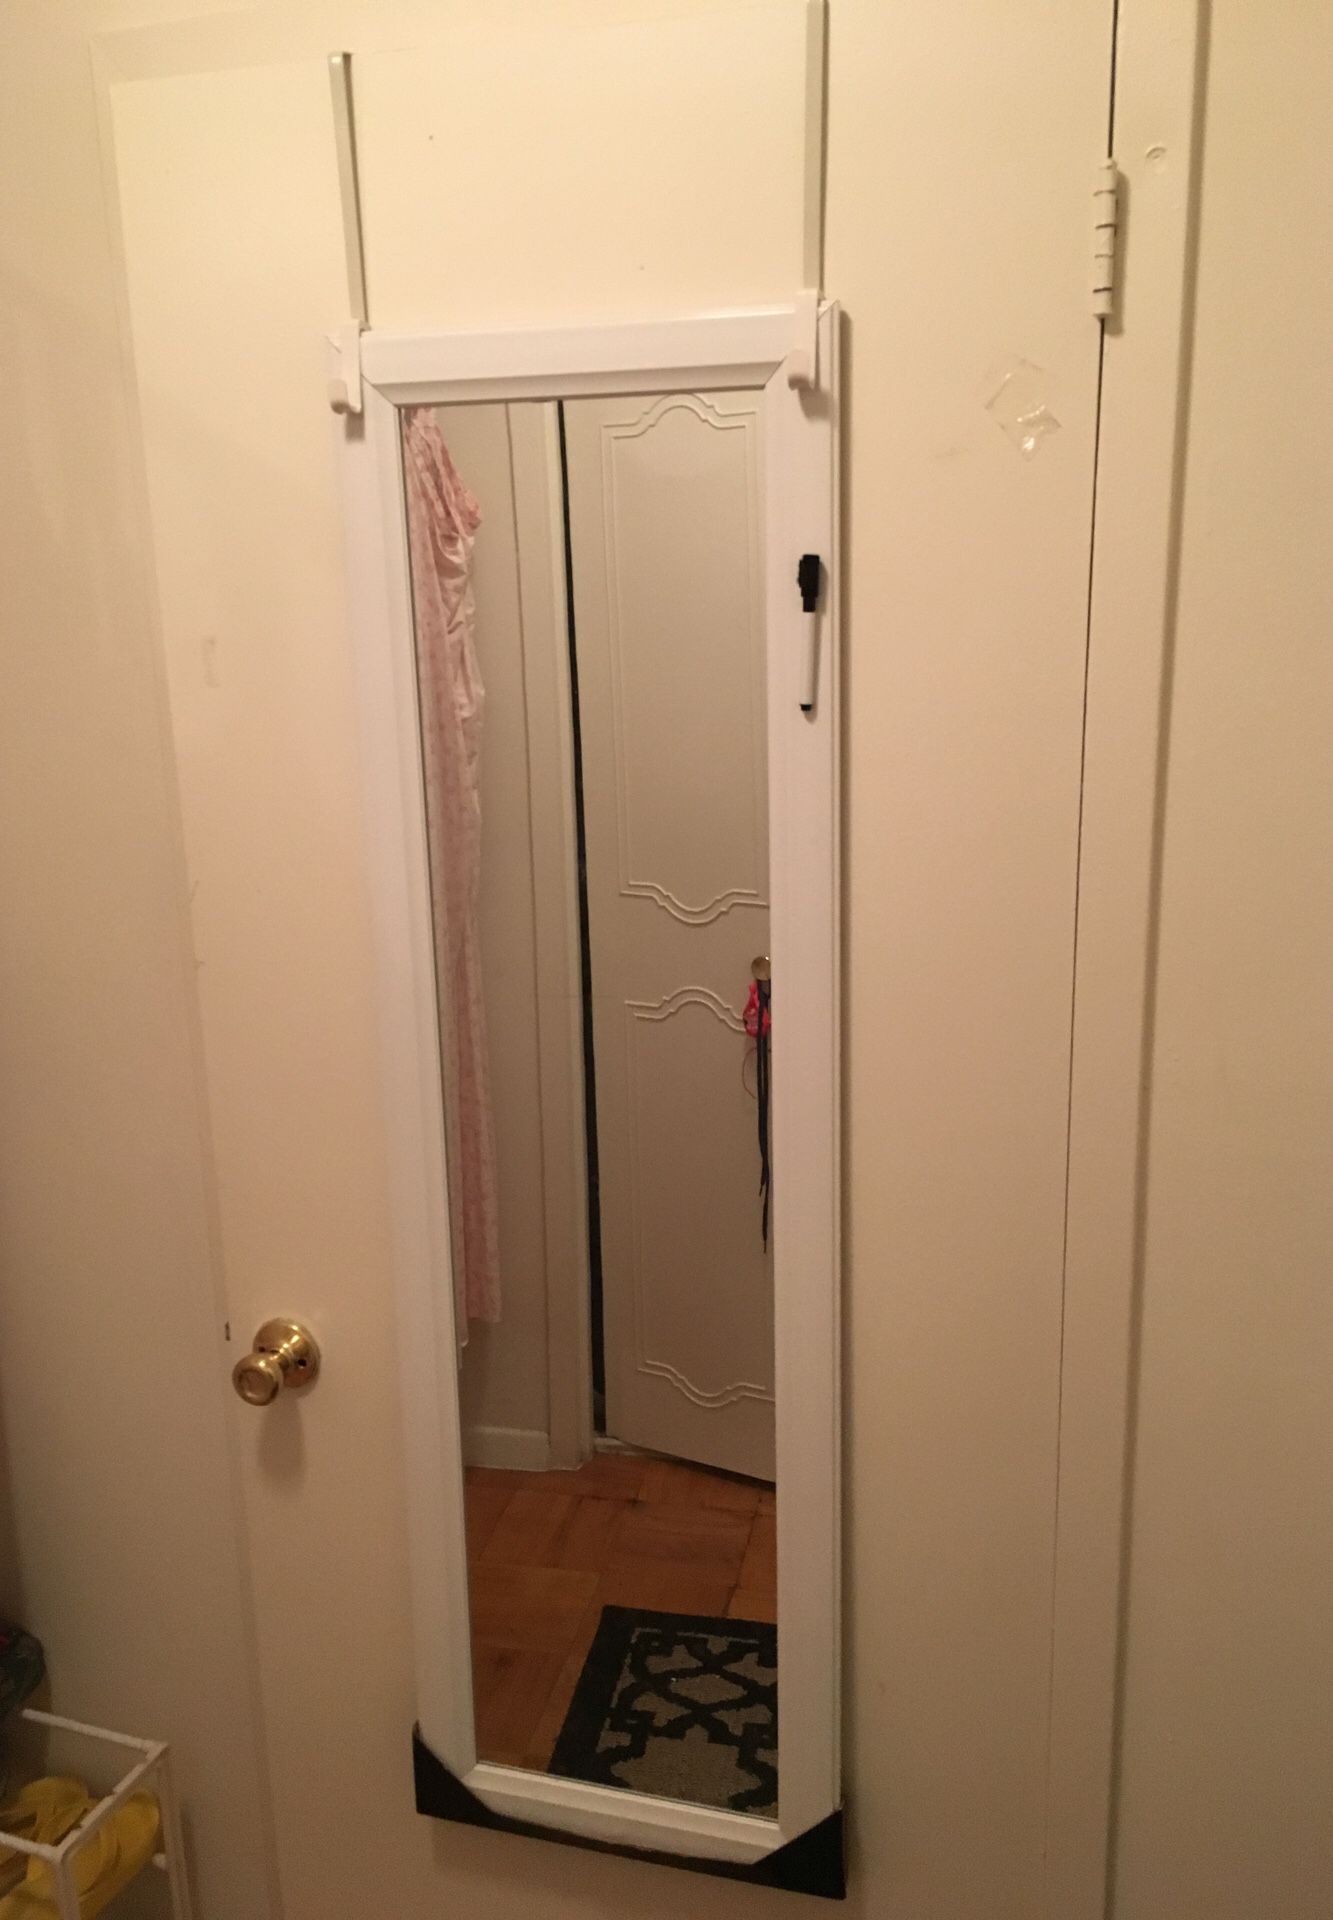 mirror can hanging on the door